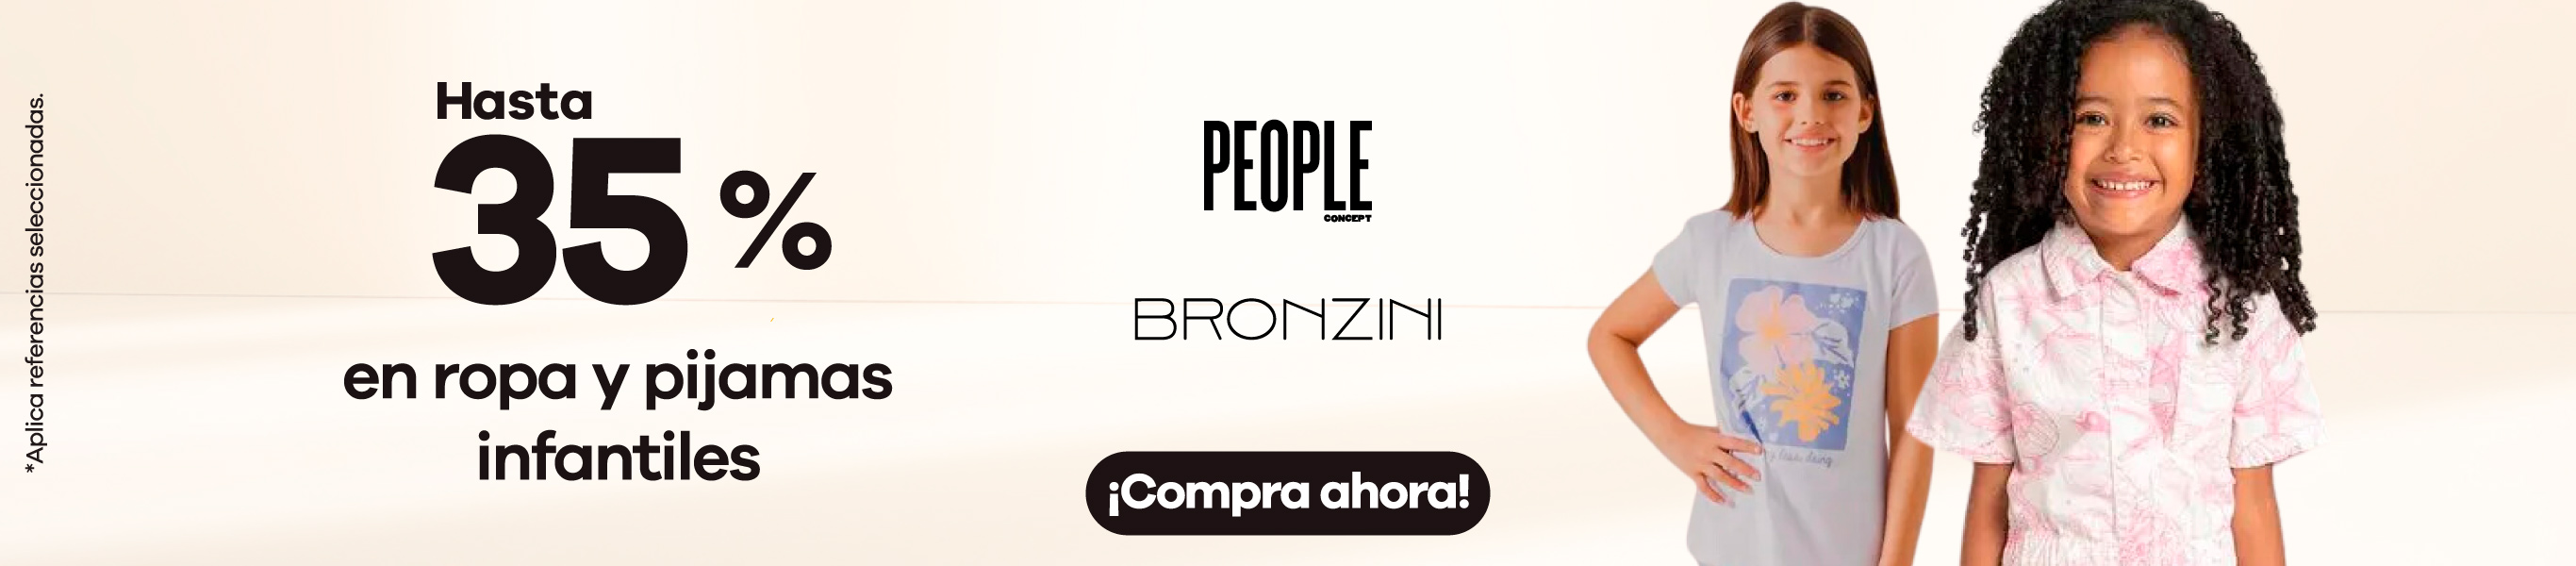 People - Bronzini